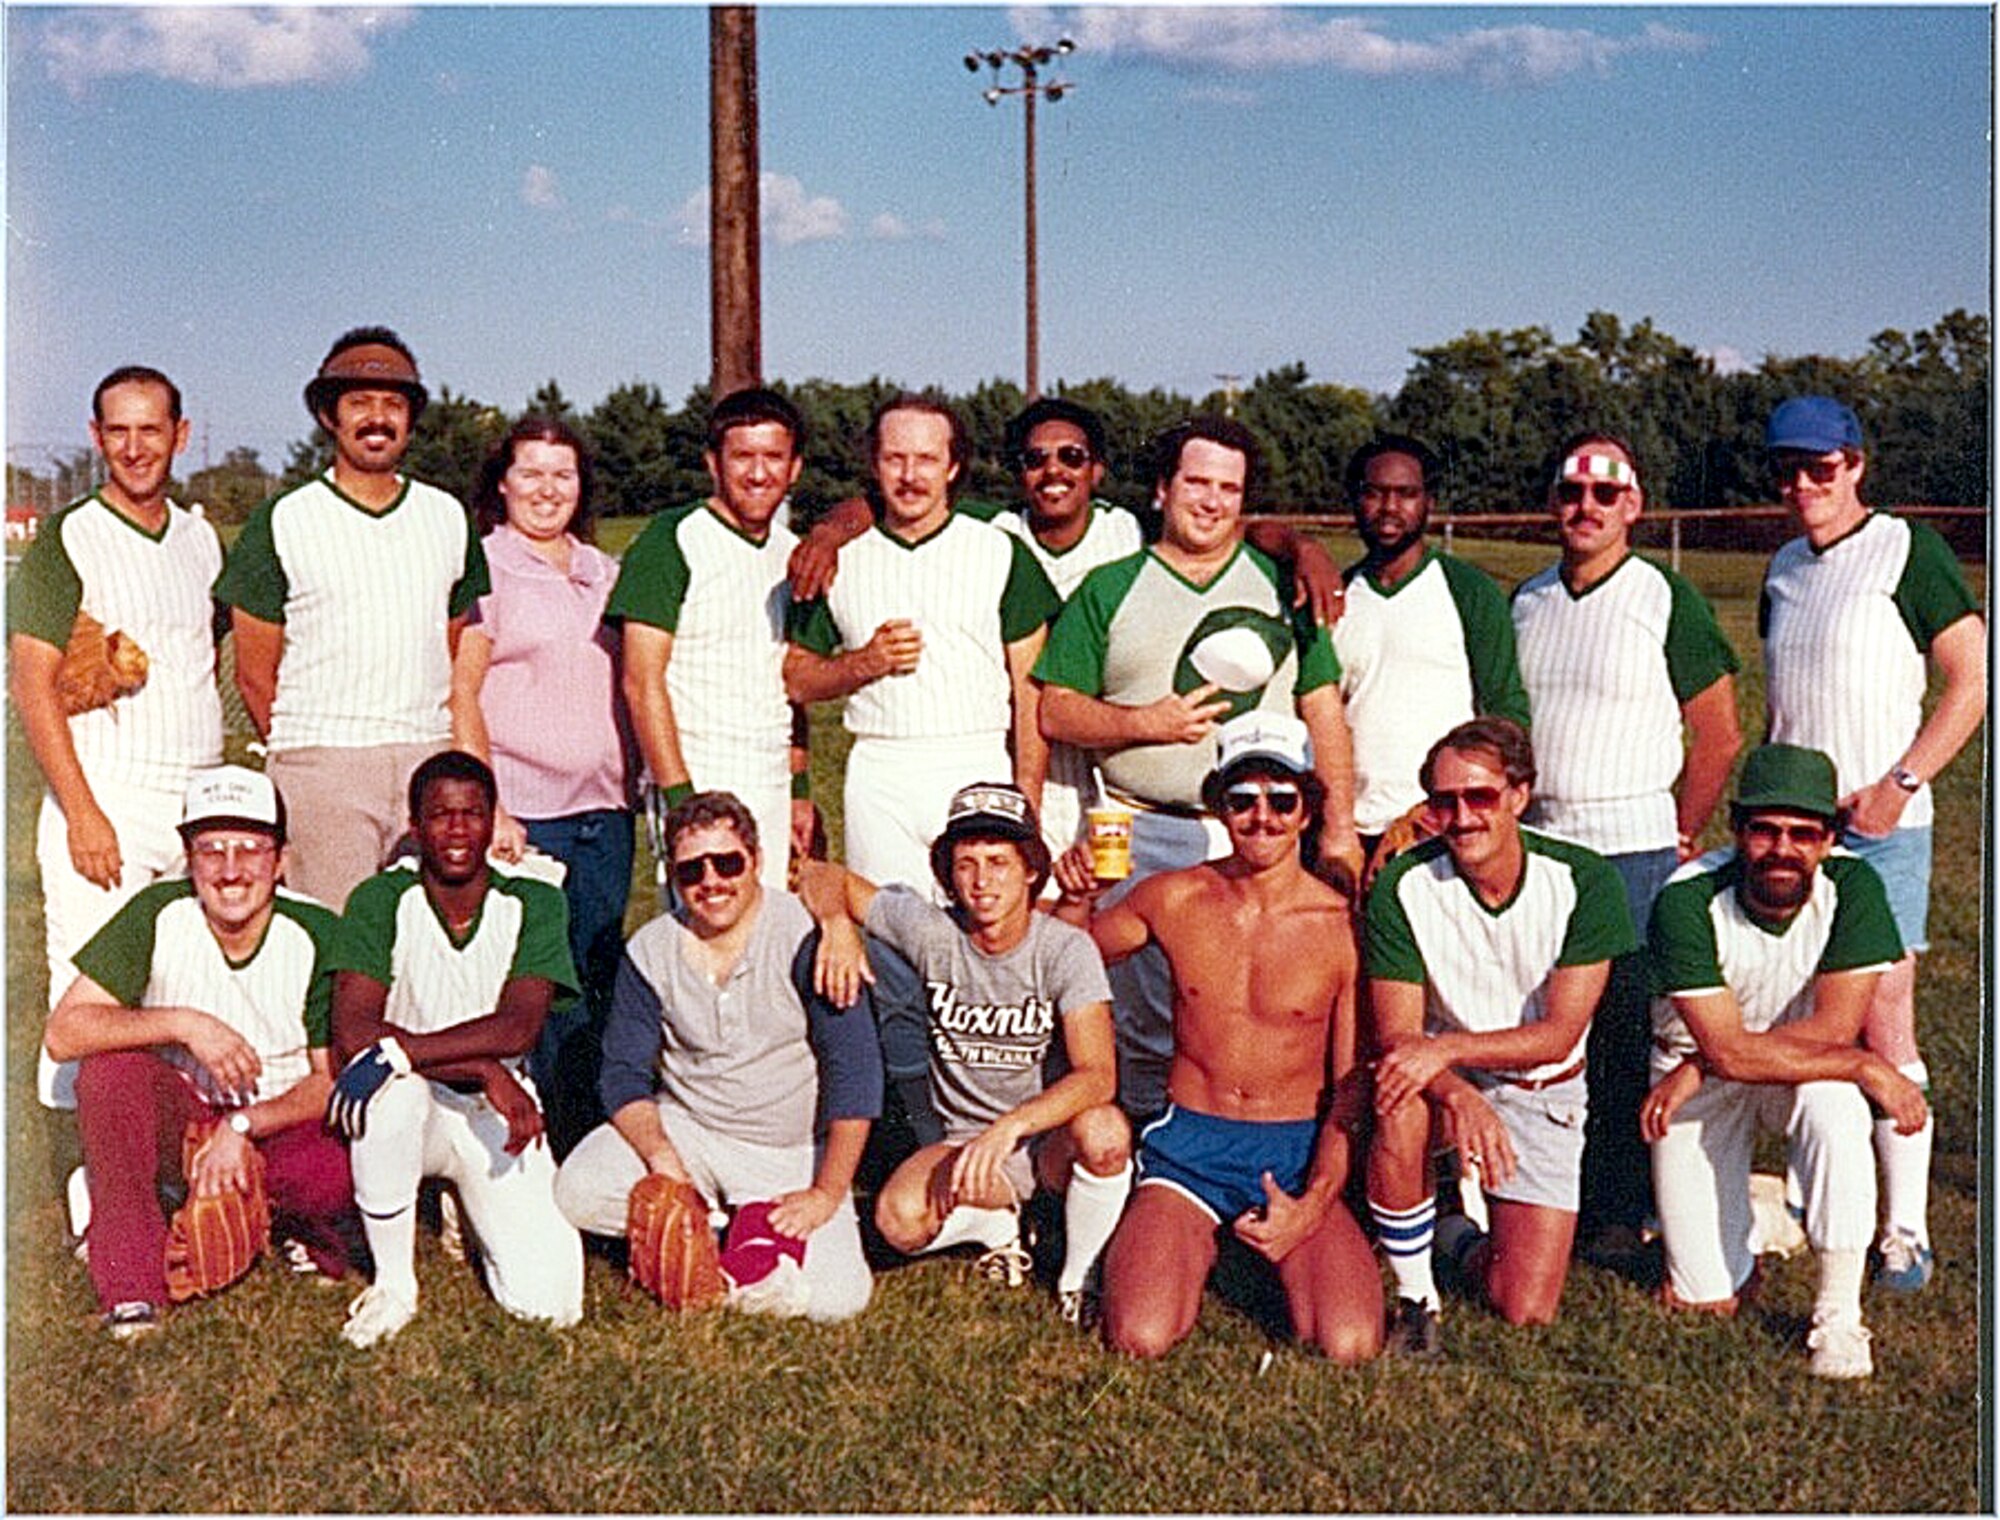 1982 softball team photo